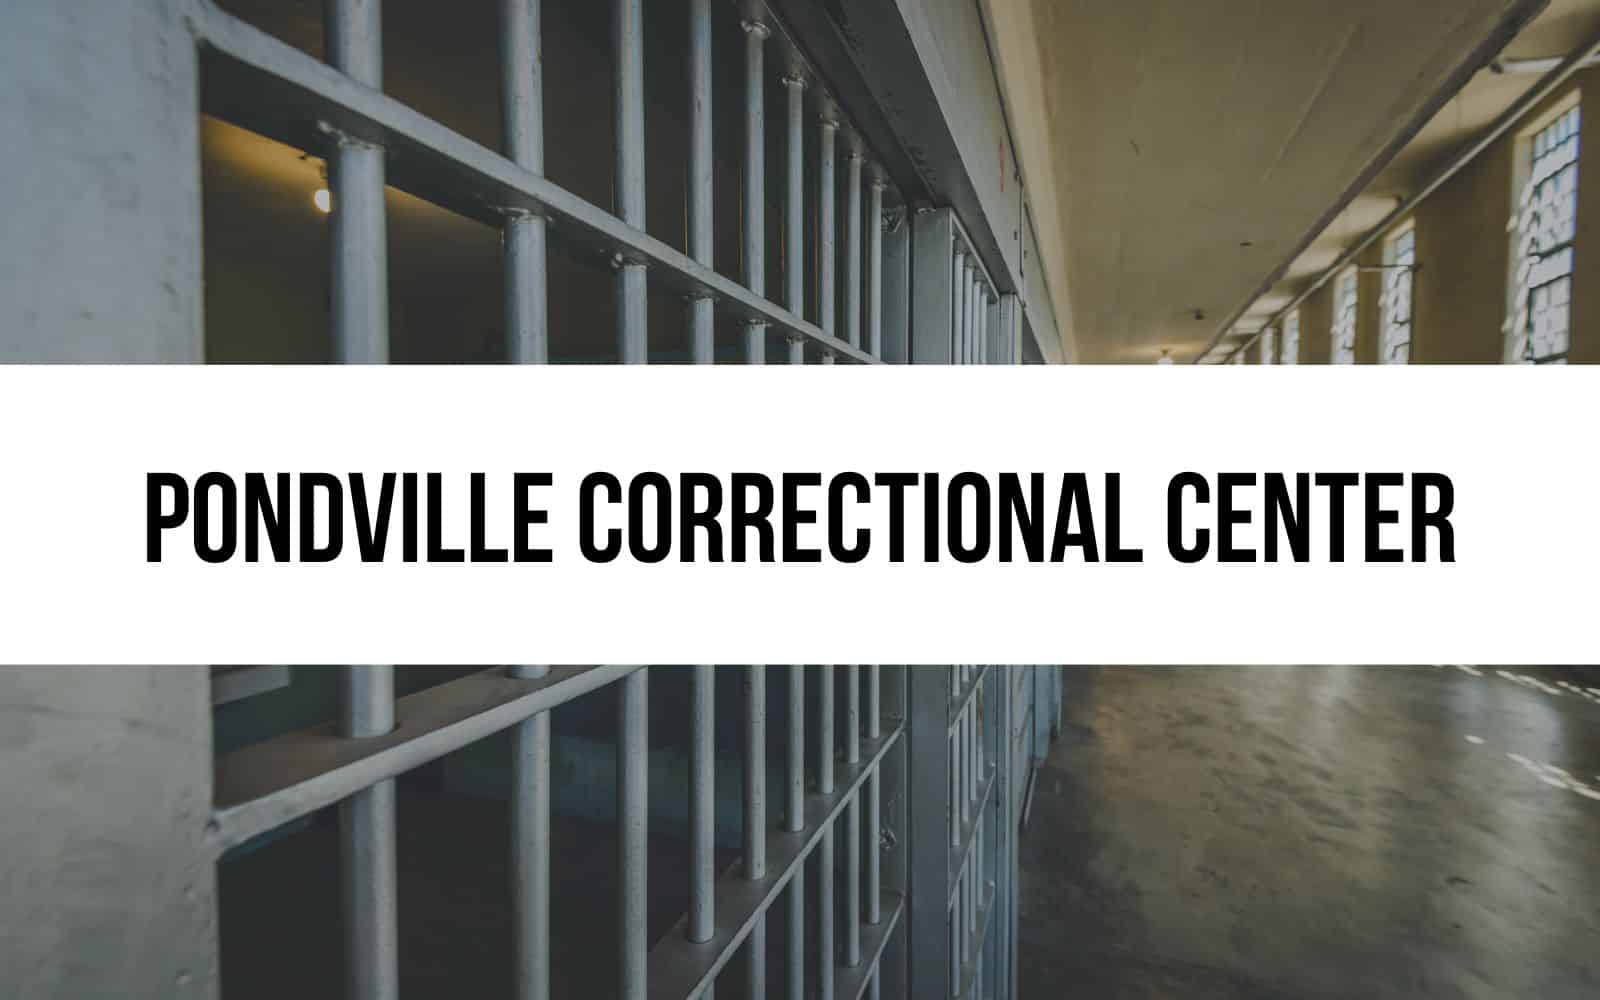 Pondville Correctional Center